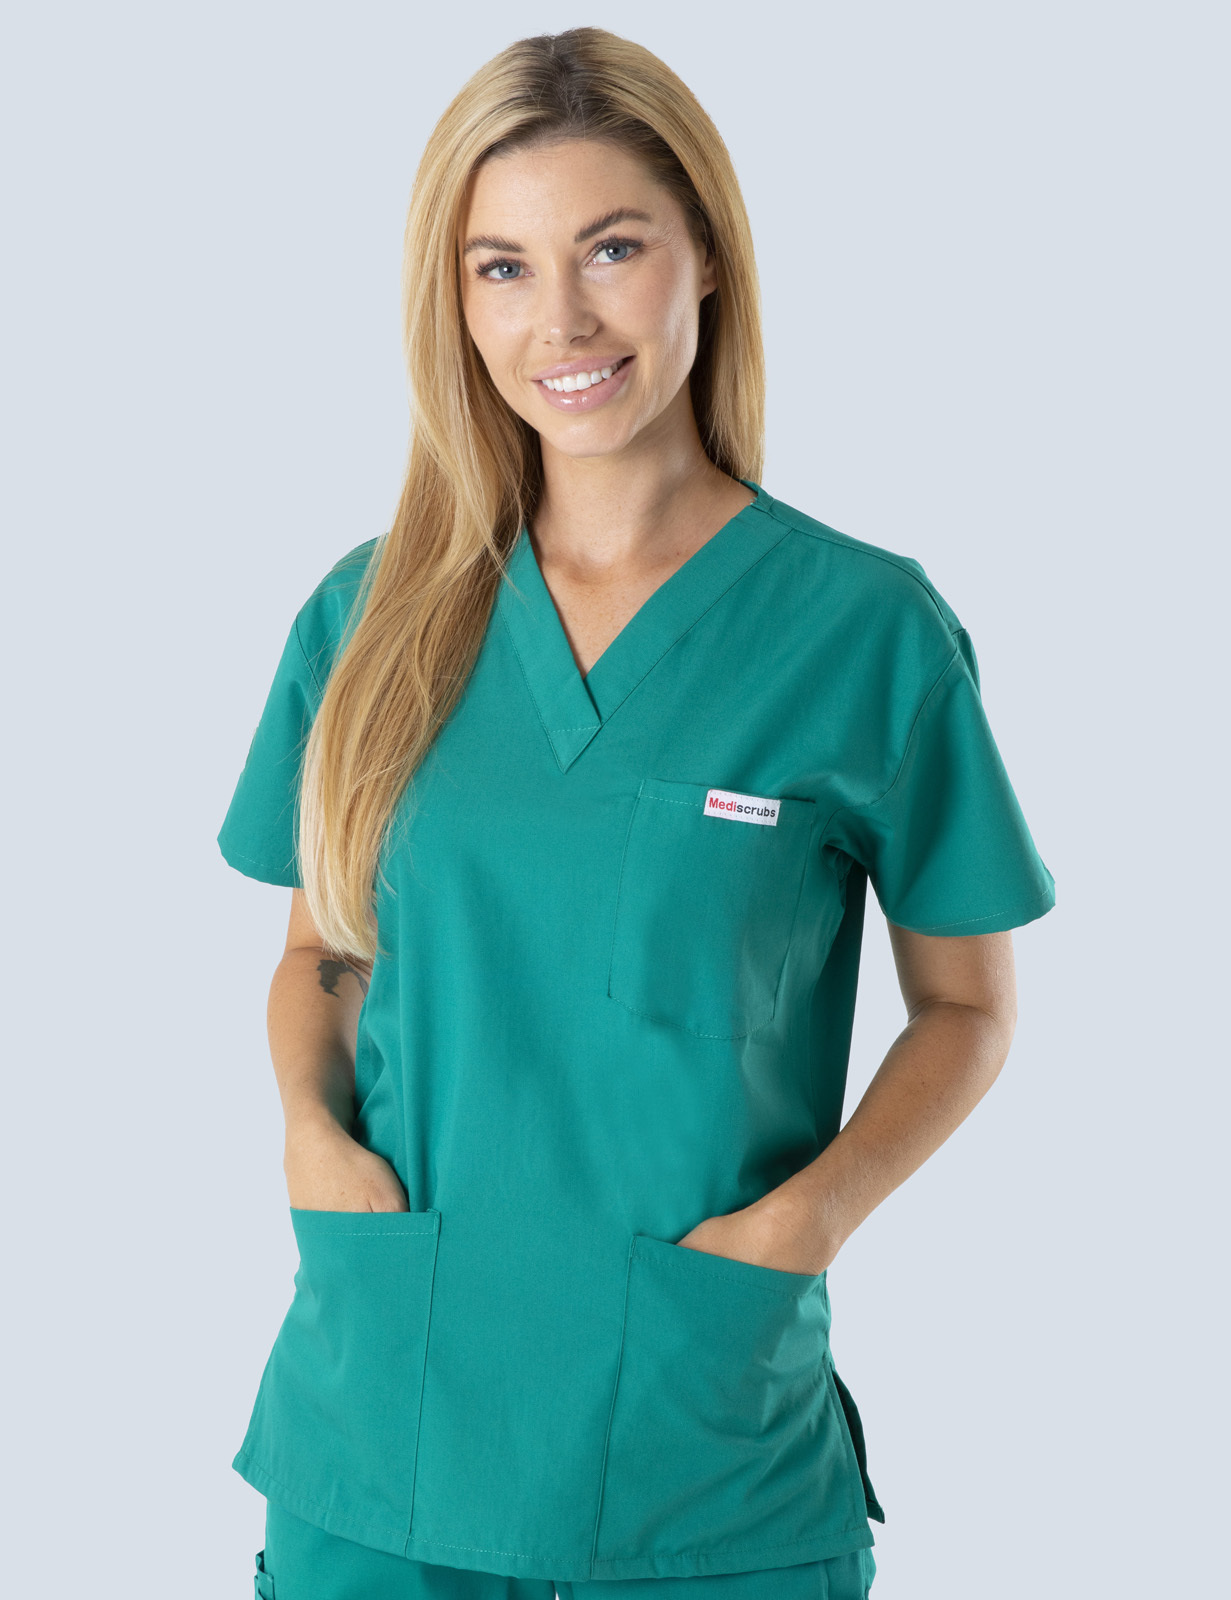 Queensland Children's Hospital Emergency Department Enrolled Nurse Uniform Top Bundle  (4 Pocket Top in Hunter incl Logos)